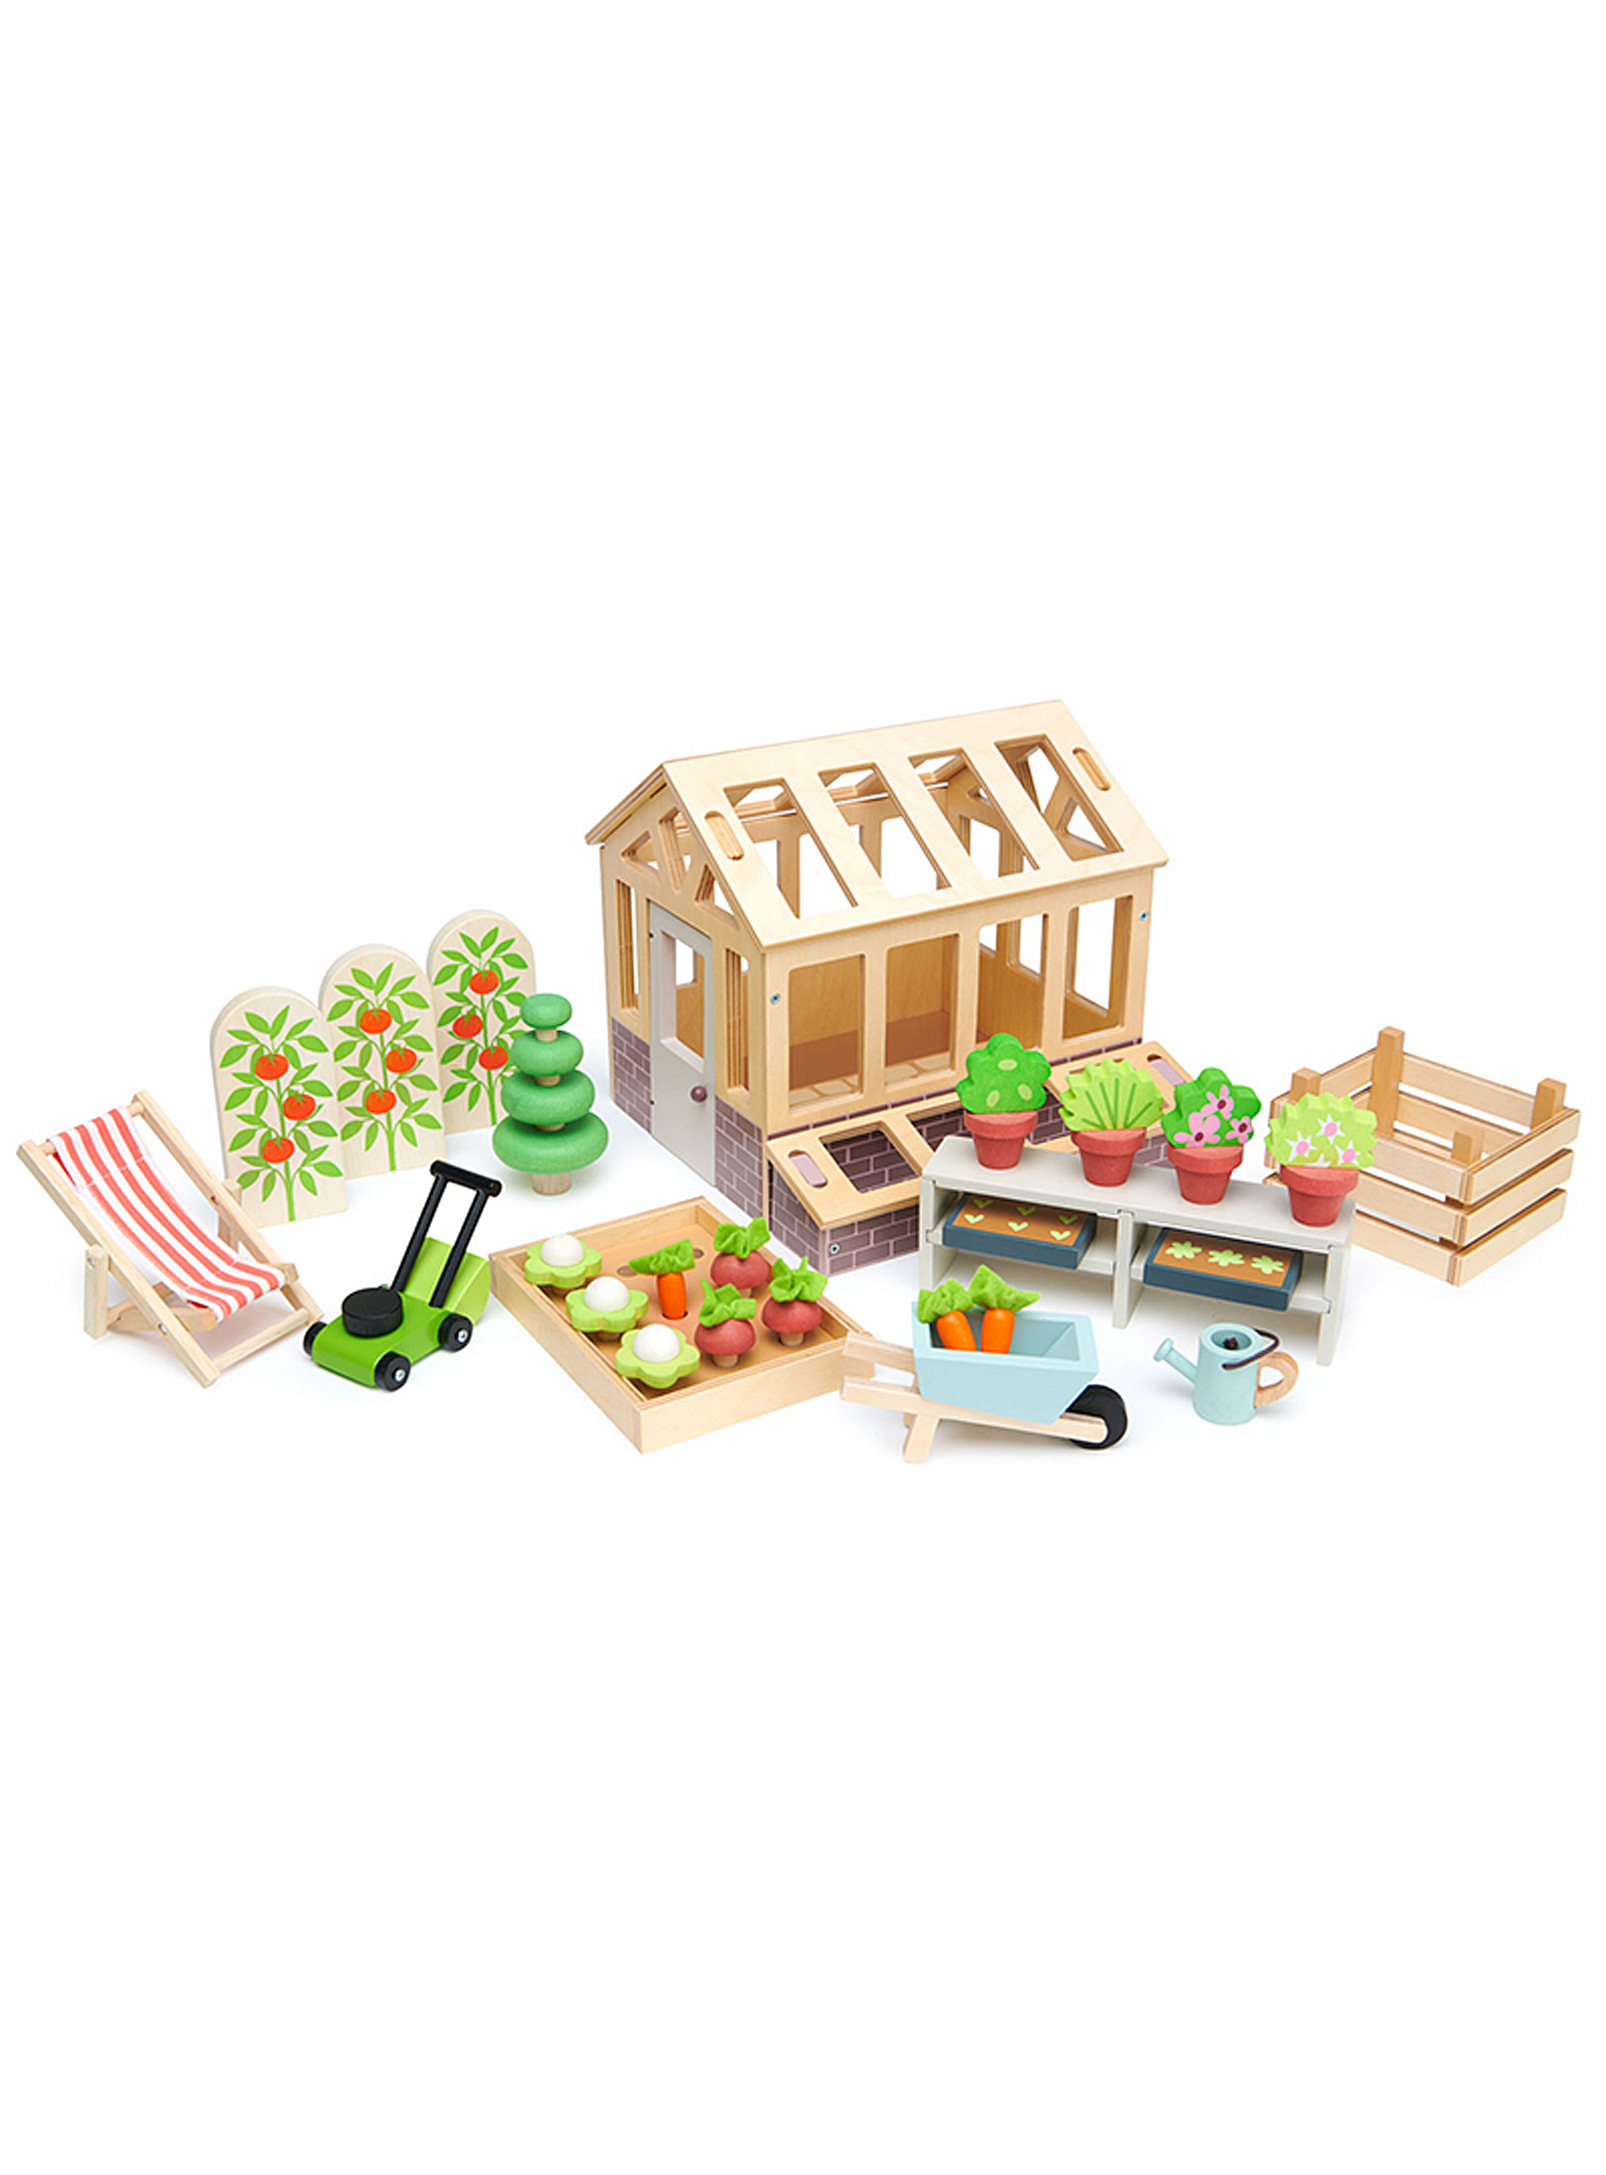 Tender Leaf Toys - Wooden greenhouse and garden set